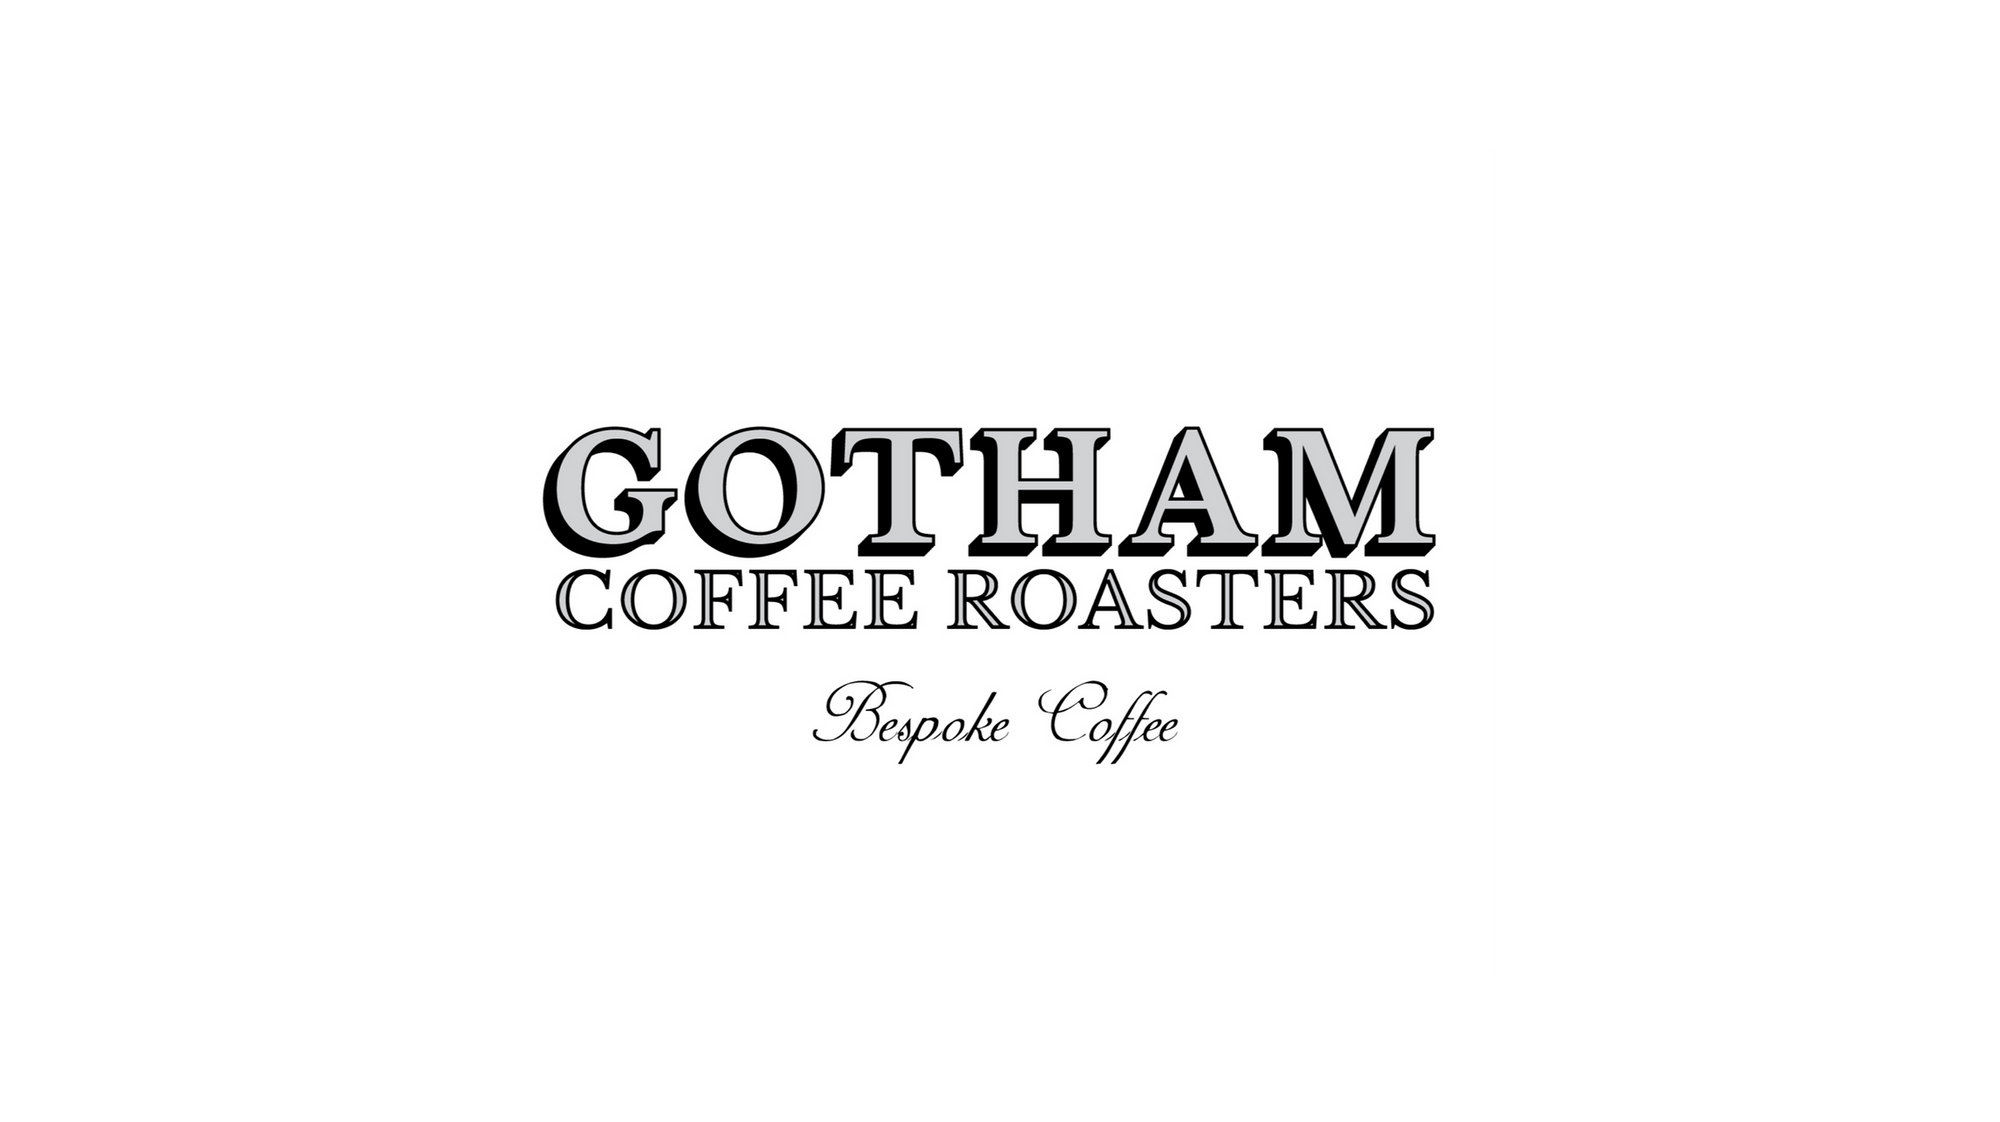 A Bespoke Coffee - Gotham Coffee Roasters